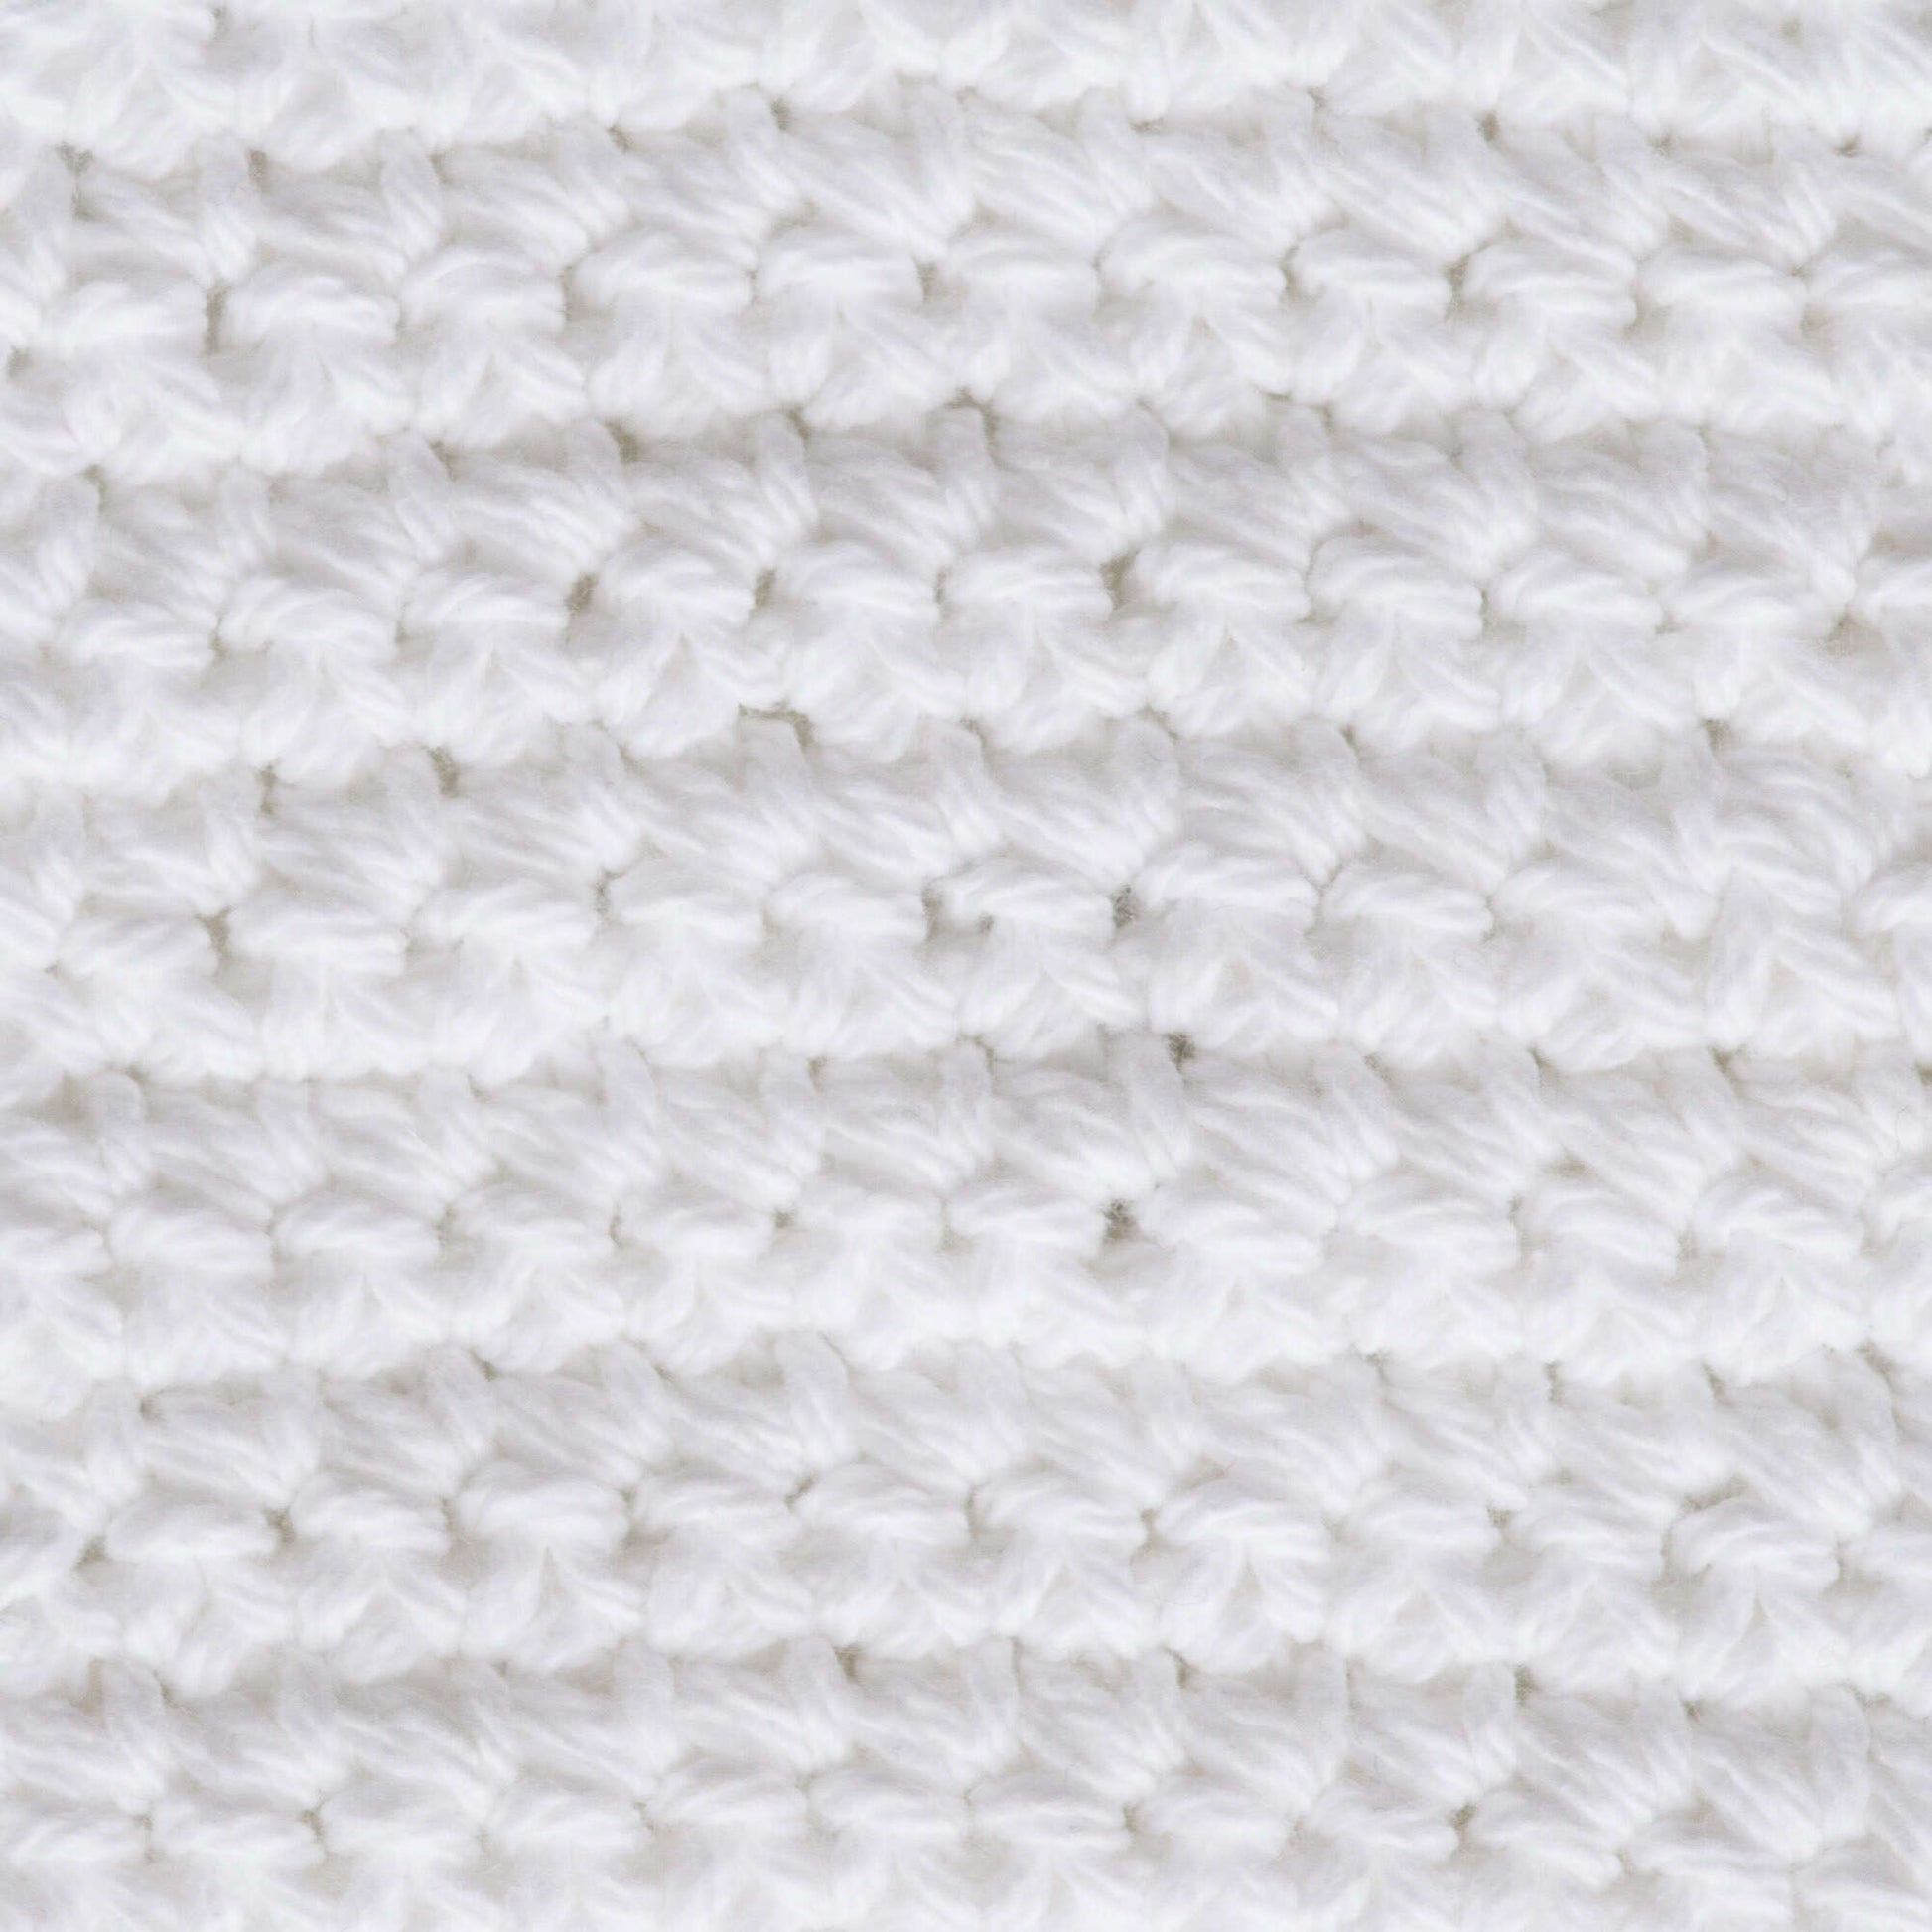 Lily Sugar'N Cream Light Blue Yarn - 6 Pack of 71g/2.5oz - Cotton - 4  Medium (Worsted) - 120 Yards - Knitting/Crochet